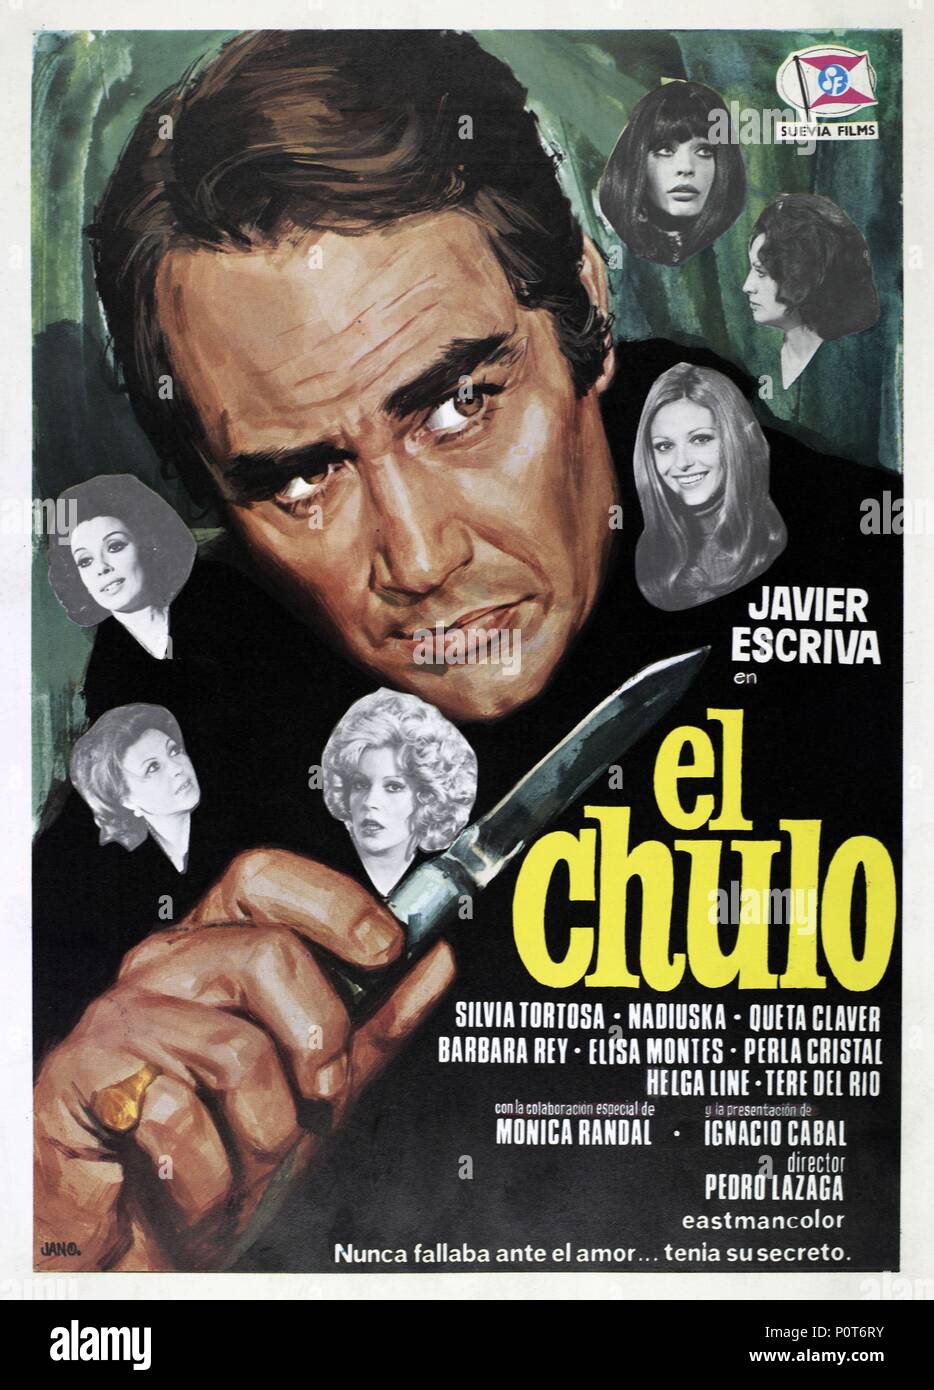 Original Film Title: EL CHULO. English Title: EL CHULO. Film Director:  PEDRO LAZAGA. Year: 1974. Credit: SUEVIA FILMS / Album Stock Photo - Alamy